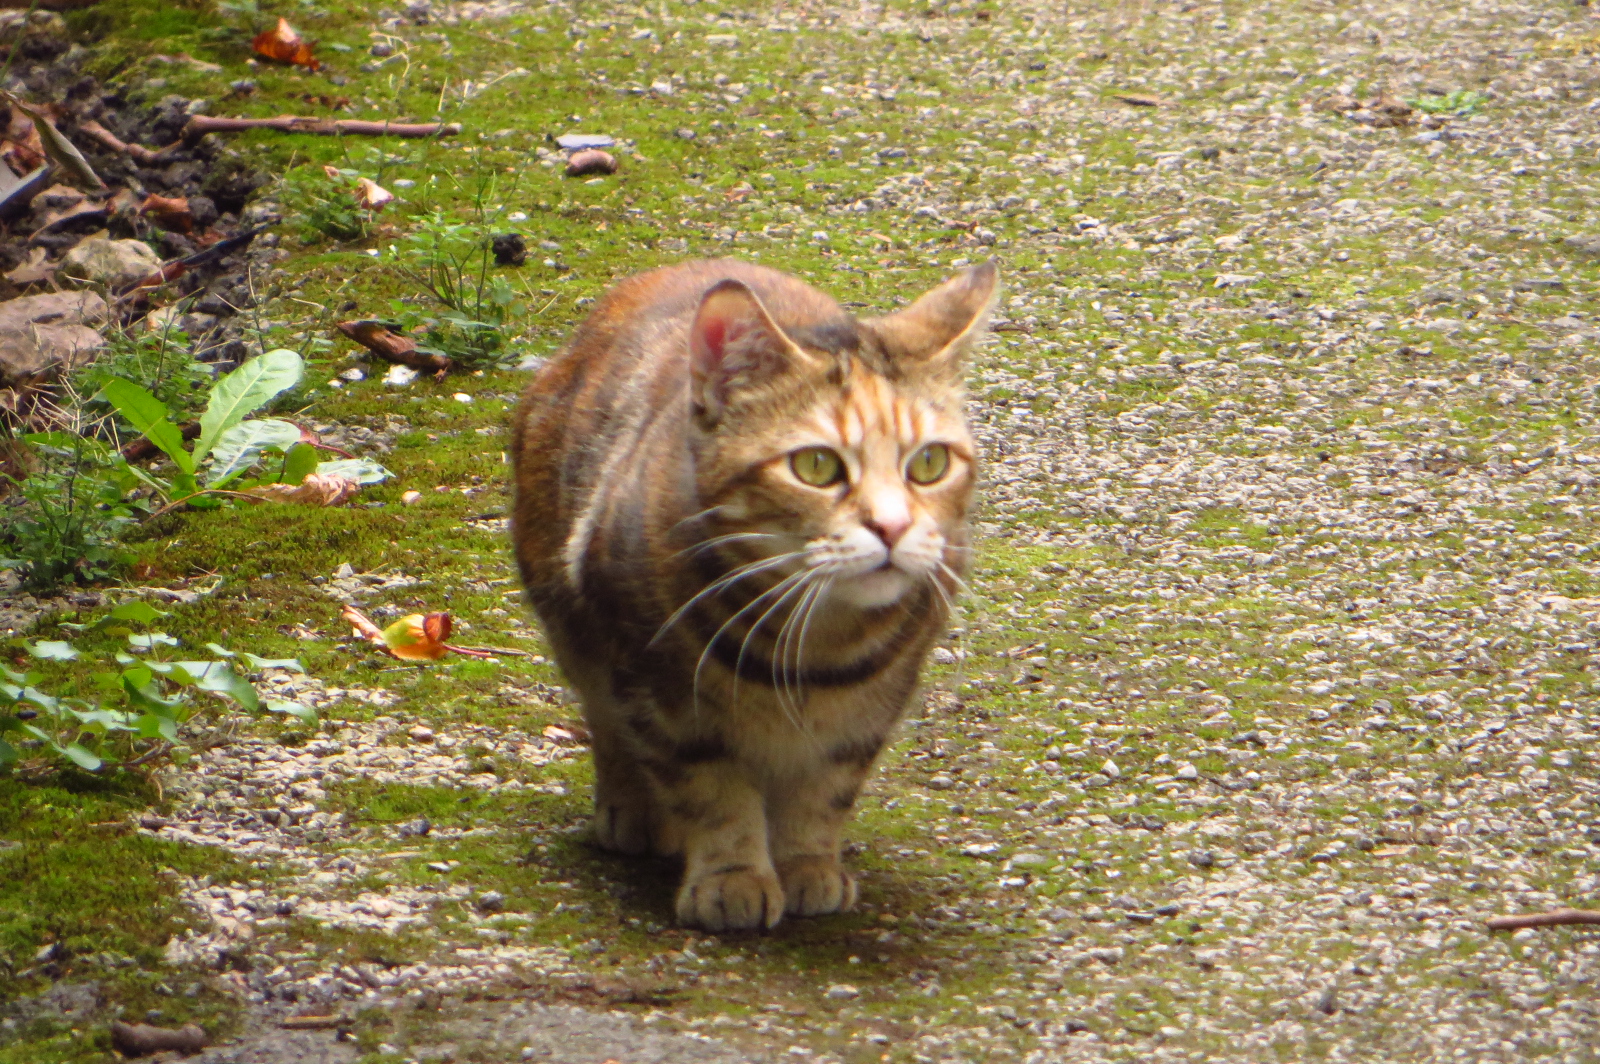 a tabby cat walks on a patch of green grass